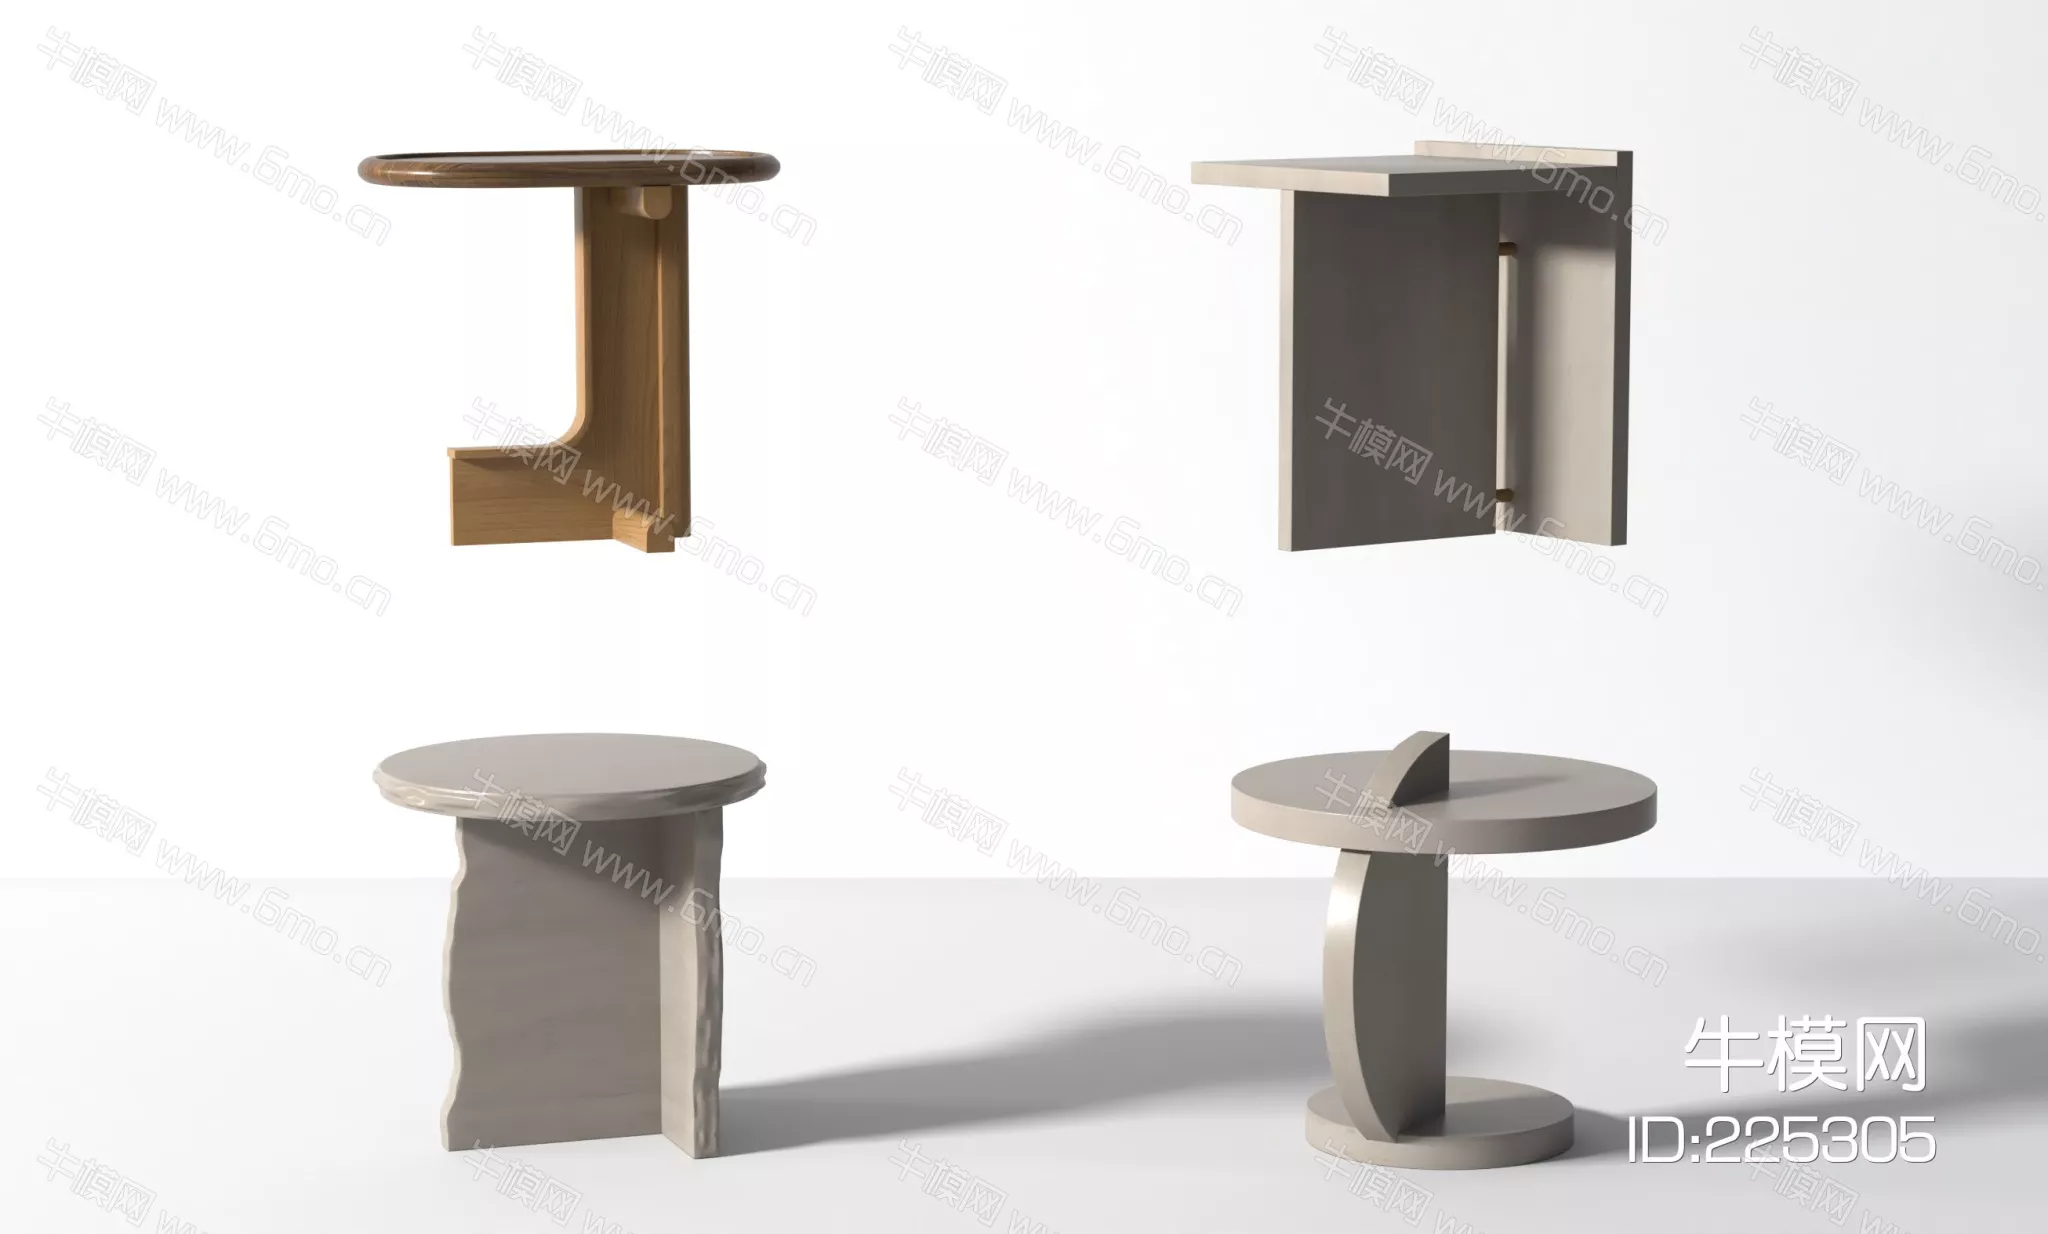 WABI SABI SIDE TABLE - SKETCHUP 3D MODEL - VRAY - 225305